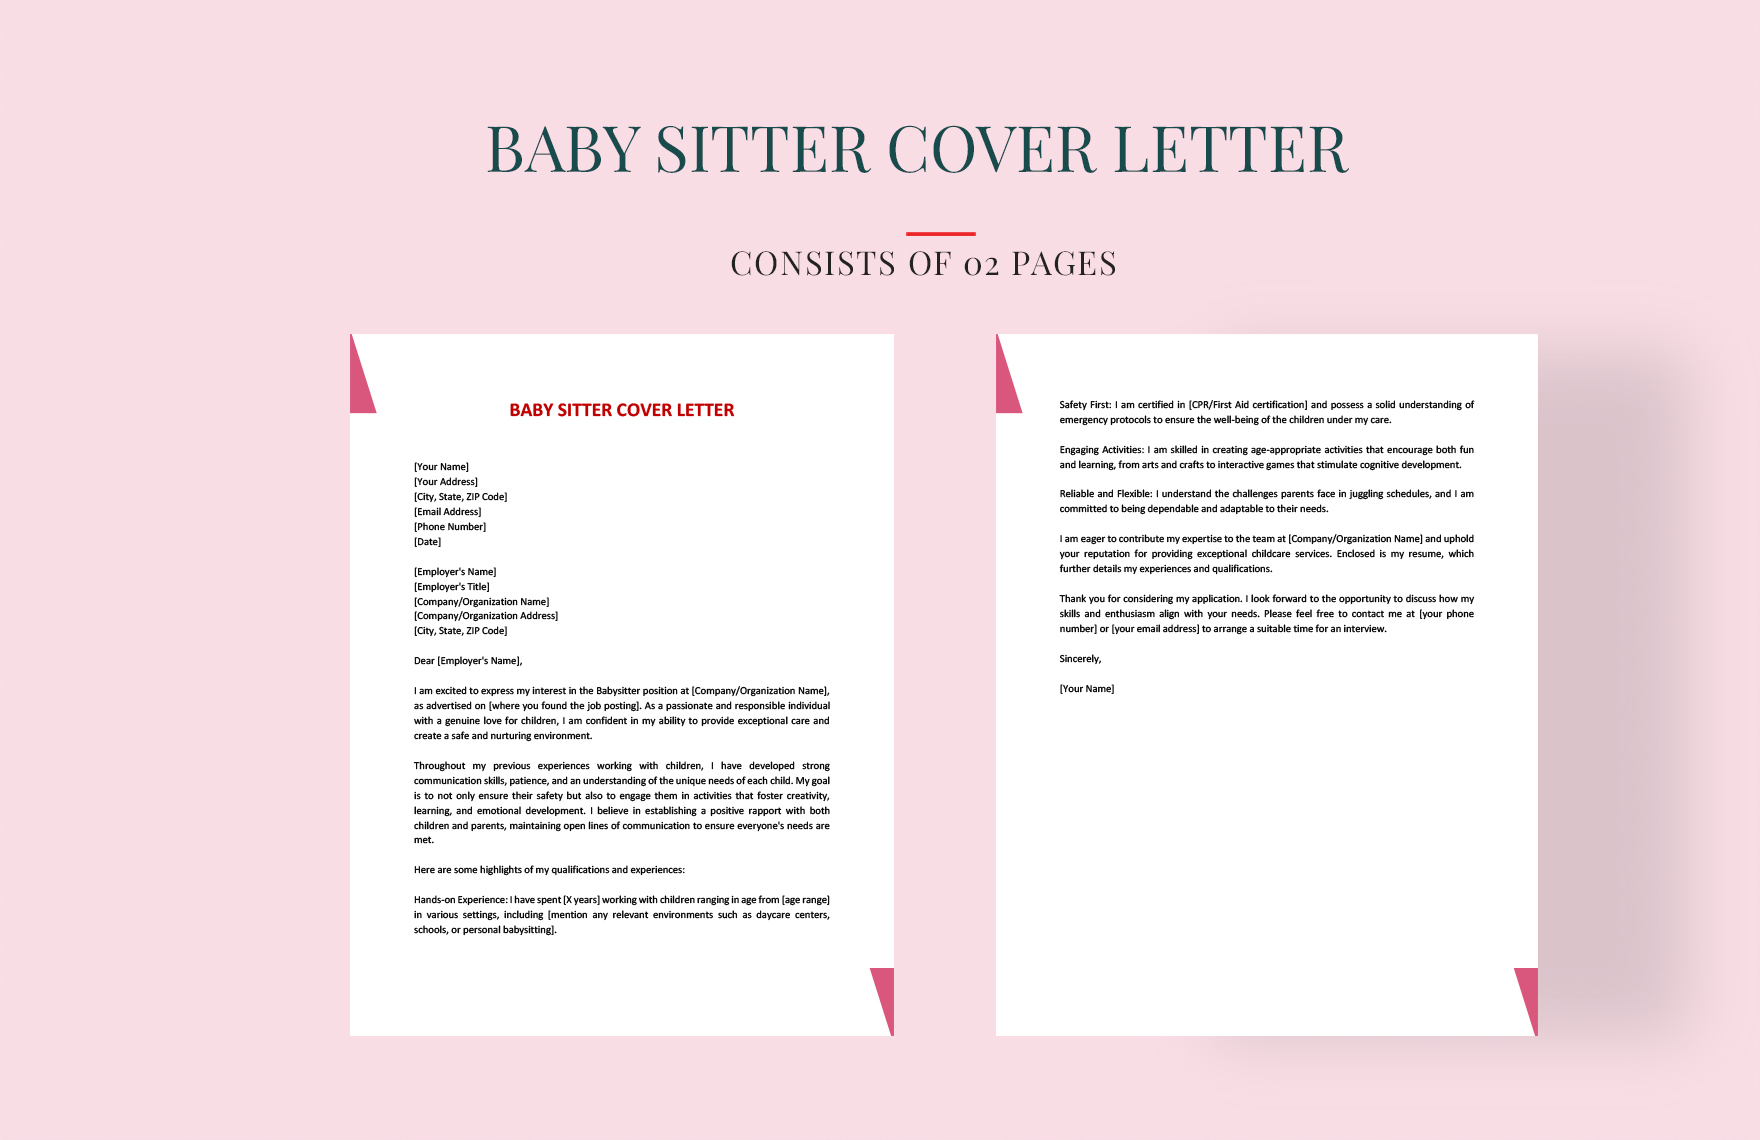 Babysitter Cover Letter in Word, Google Docs, PDF